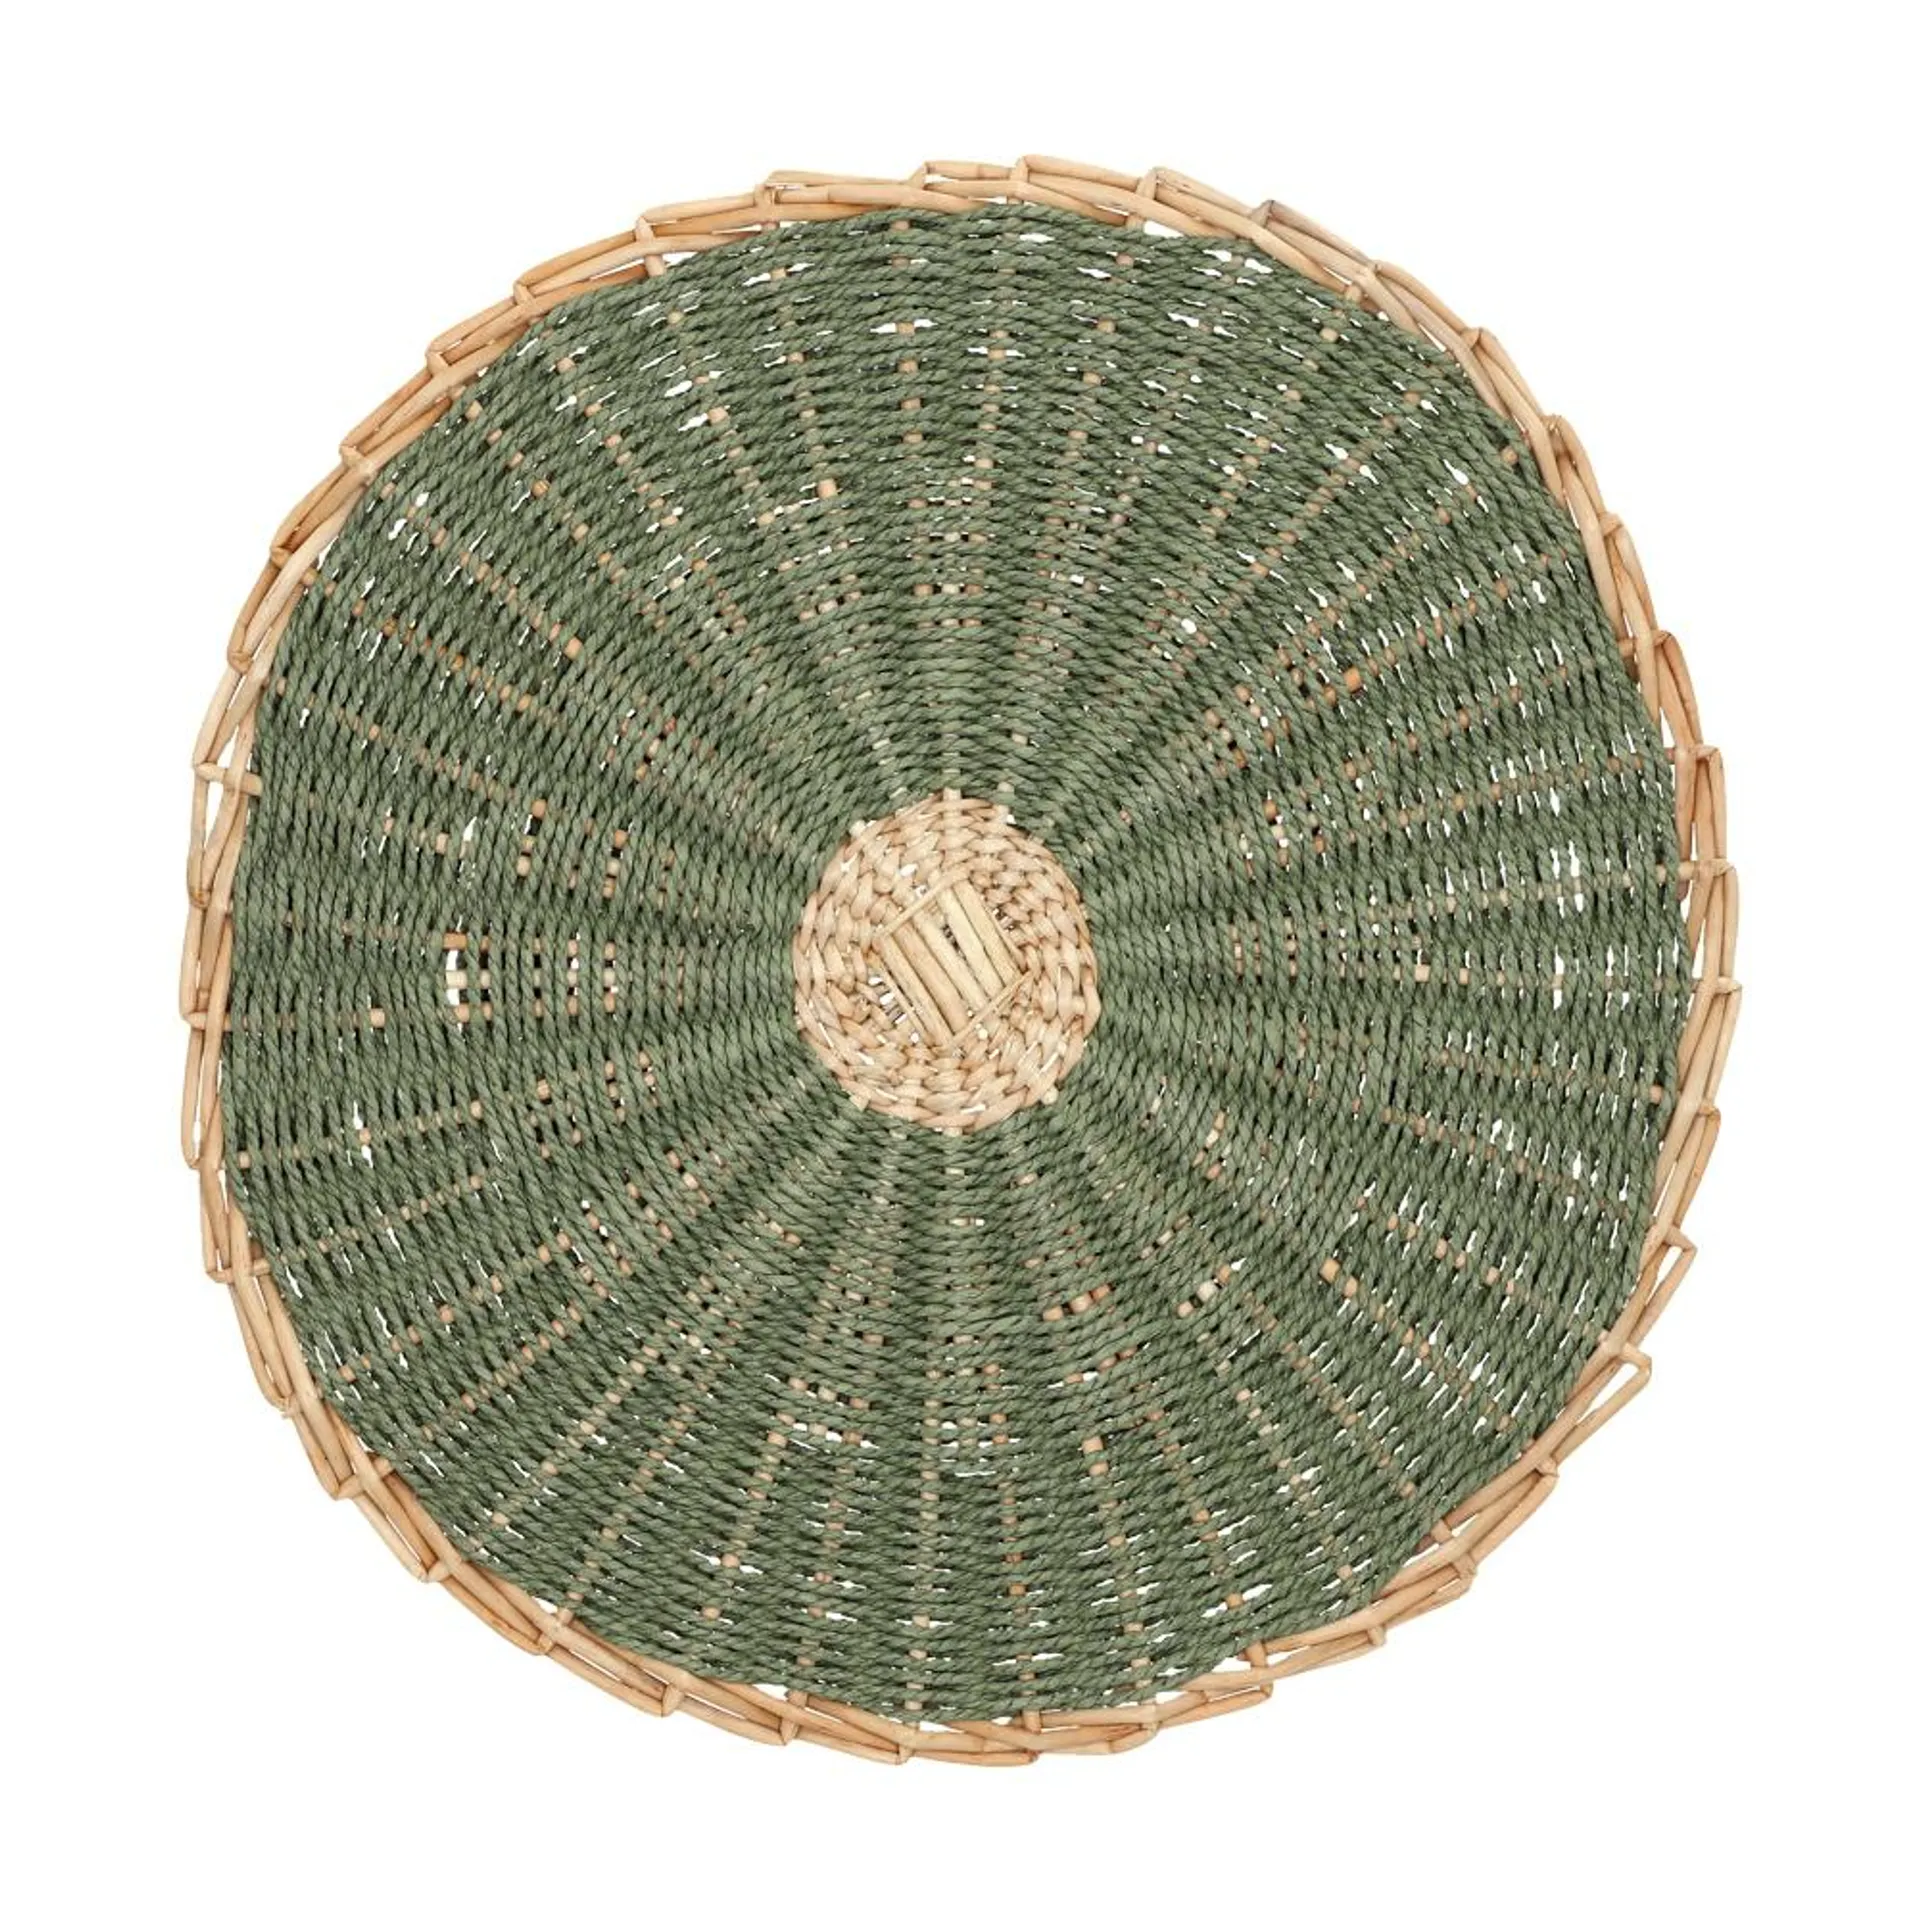 Plato base de fibra natural diámetro 38 cm